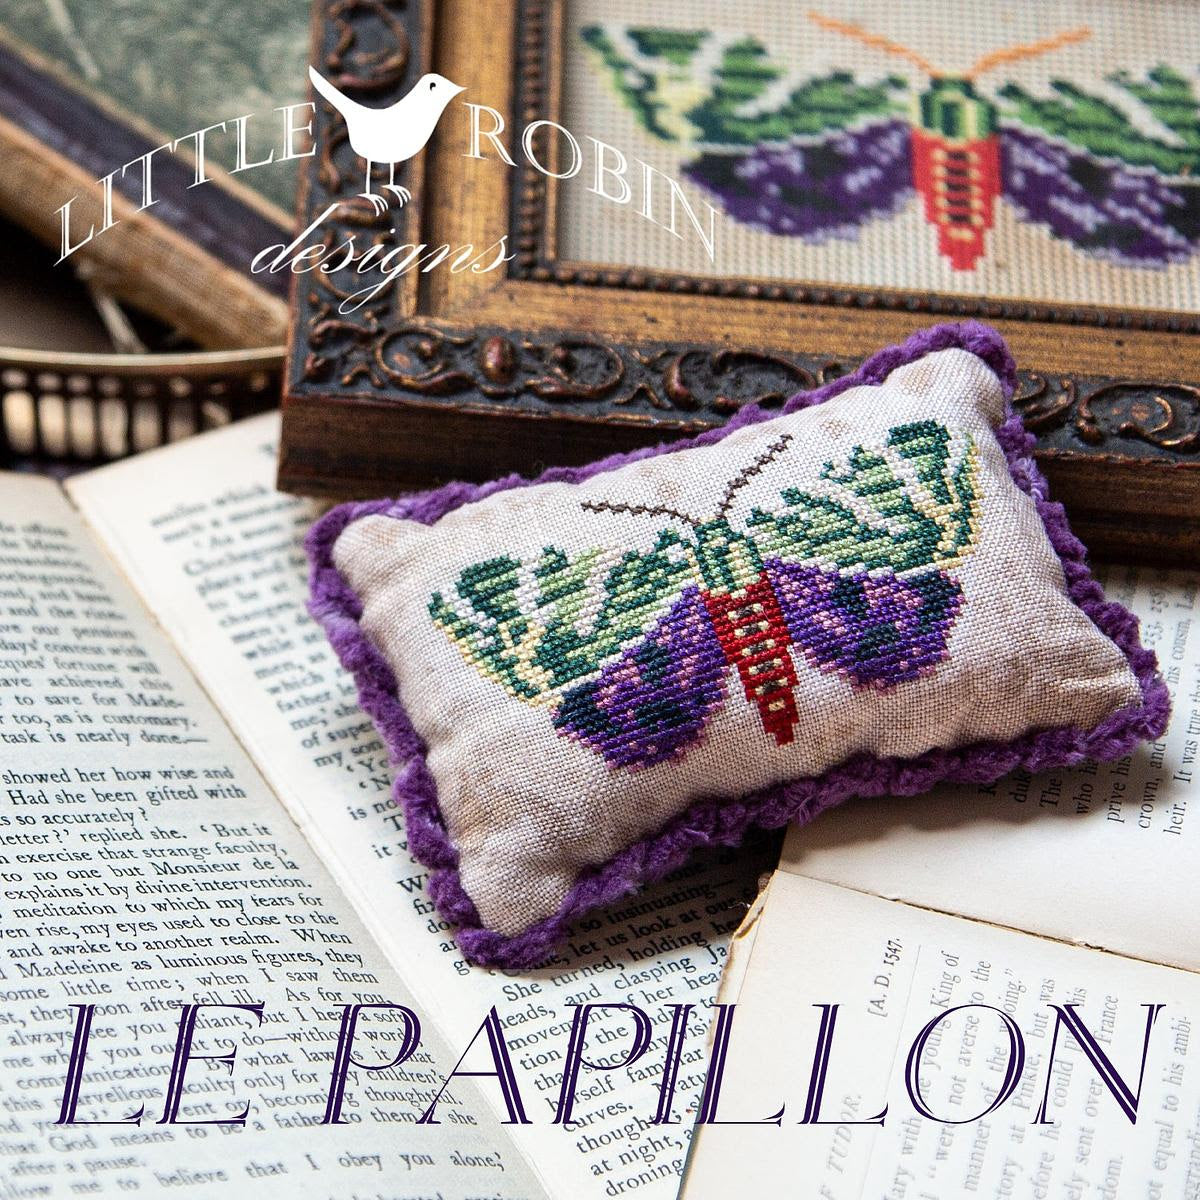 Le Papillon - Little Robin Designs - Cross Stitch Pattern, Needlecraft Patterns, The Crafty Grimalkin - A Cross Stitch Store